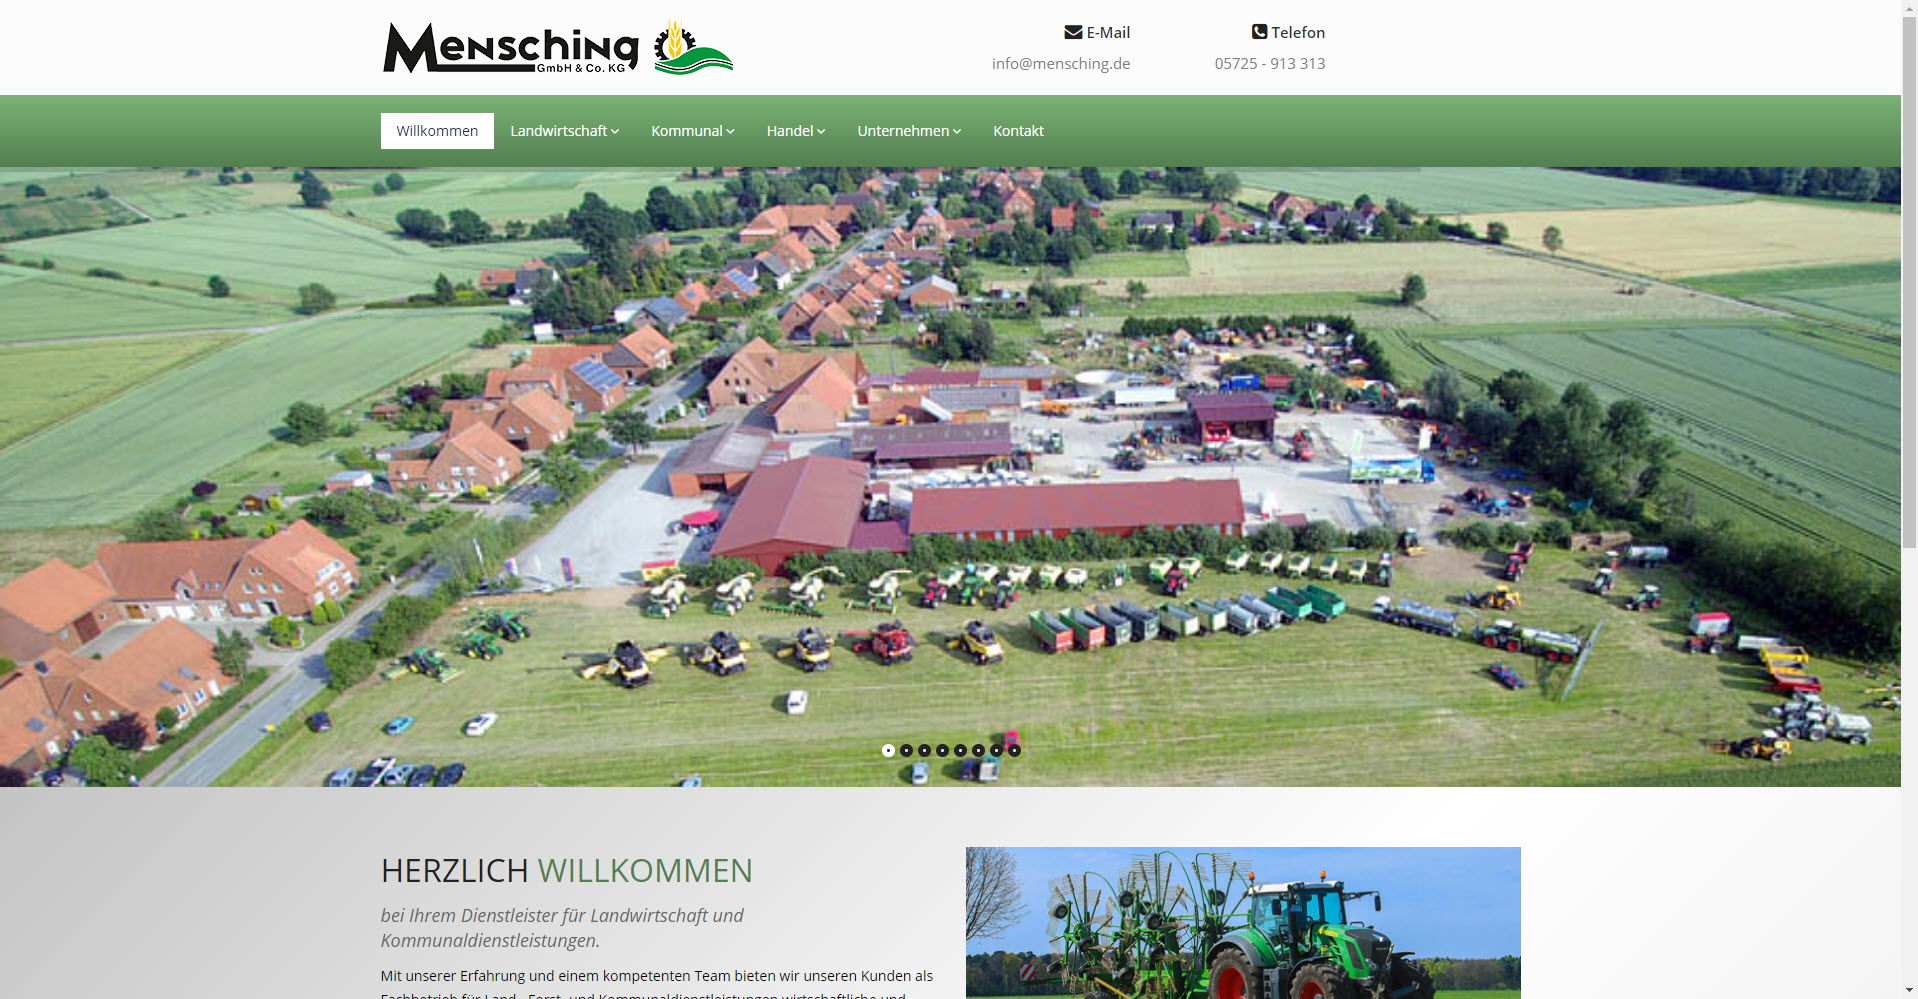 Mensching GmbH